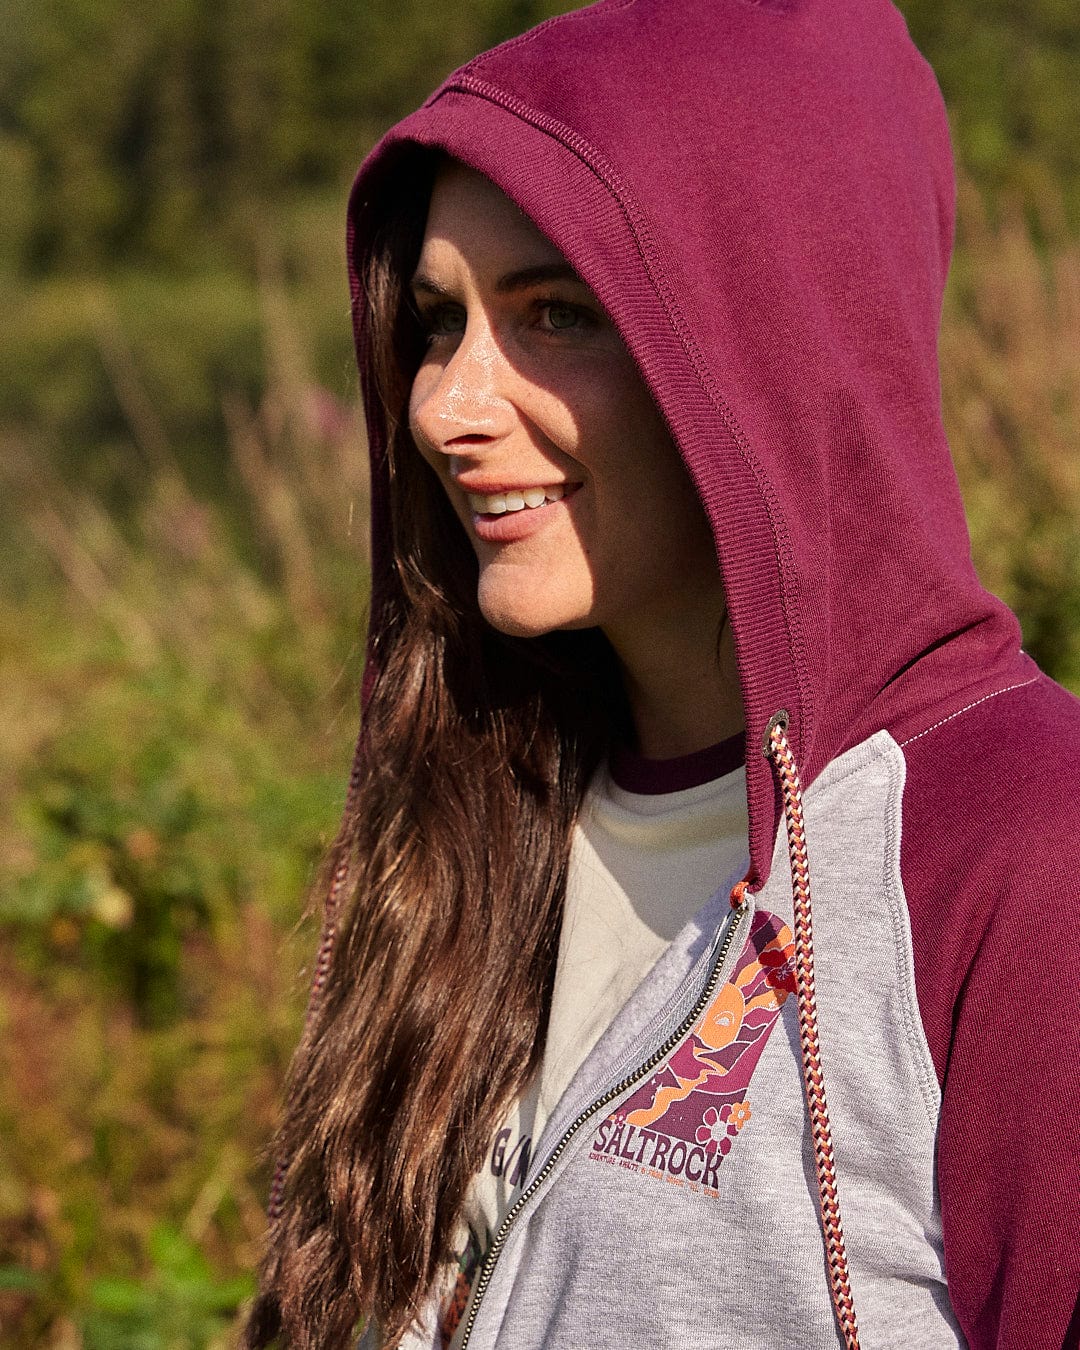 A woman wearing a cozy Adventure Awaits - Womens Zip Hoodie - Light Grey Saltrock hoodie enjoys the outdoors.